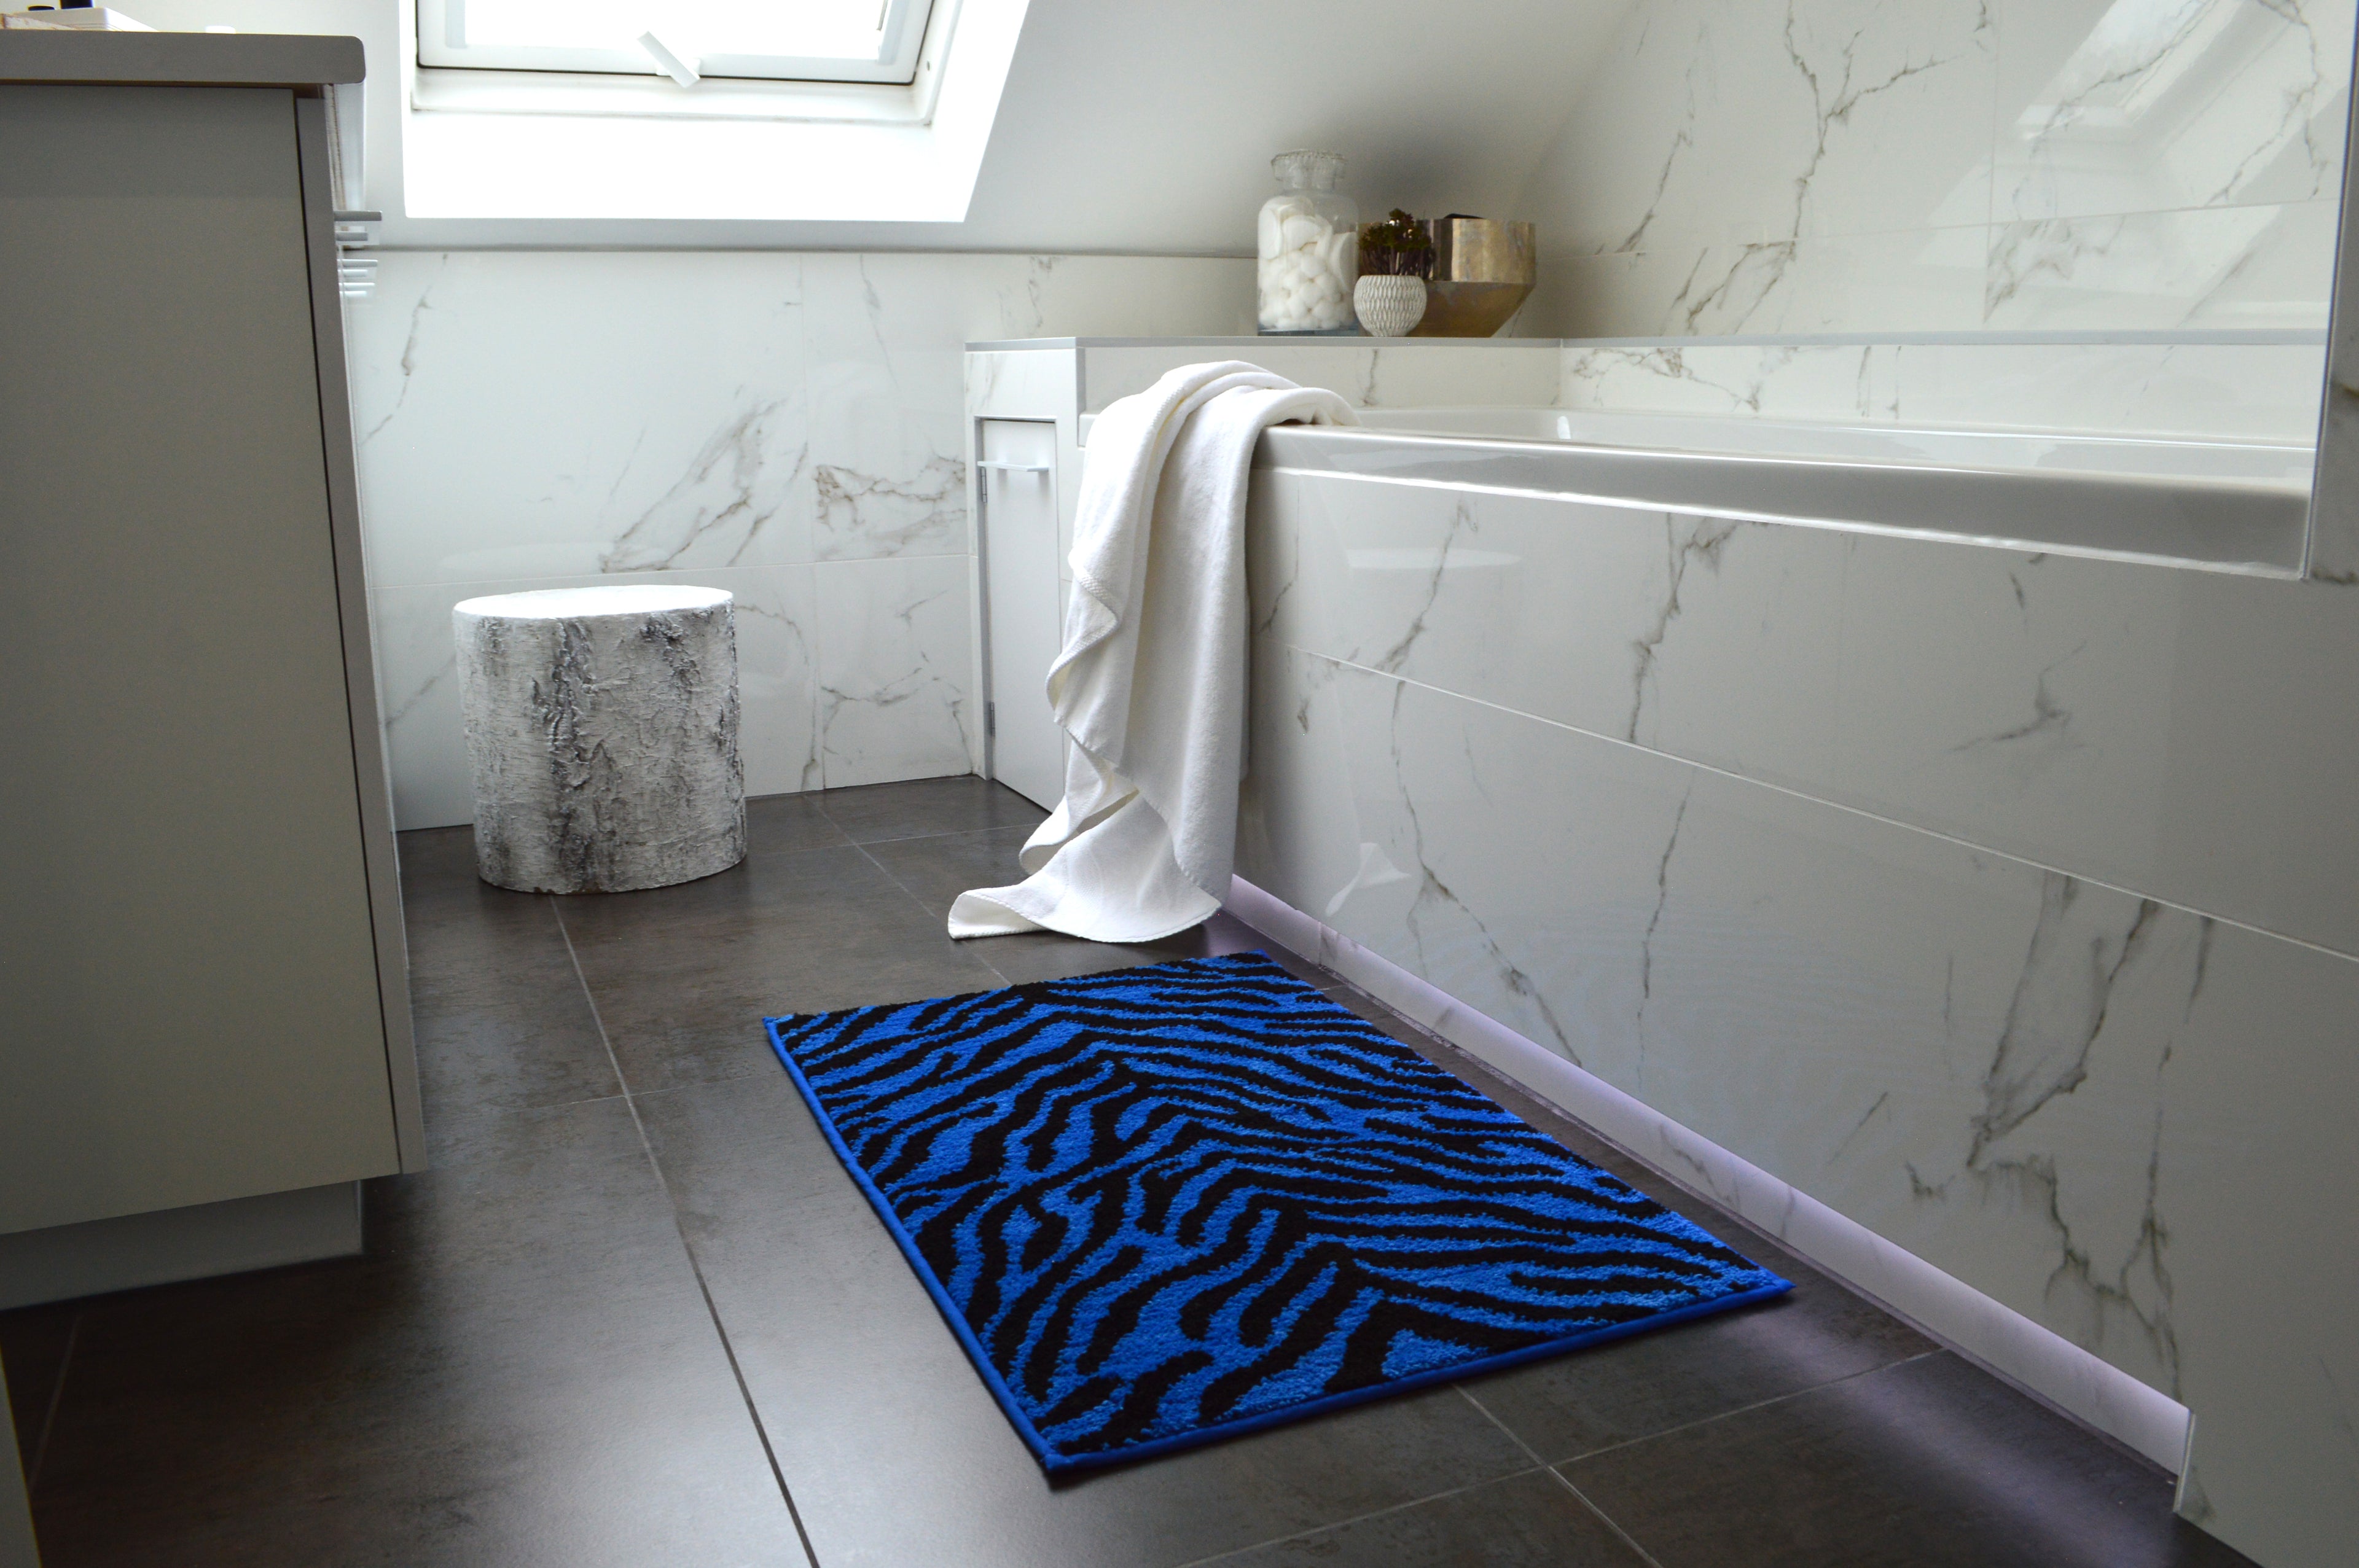 Funky Bath Mat - Blue/Black Zebra Print Bath Mat